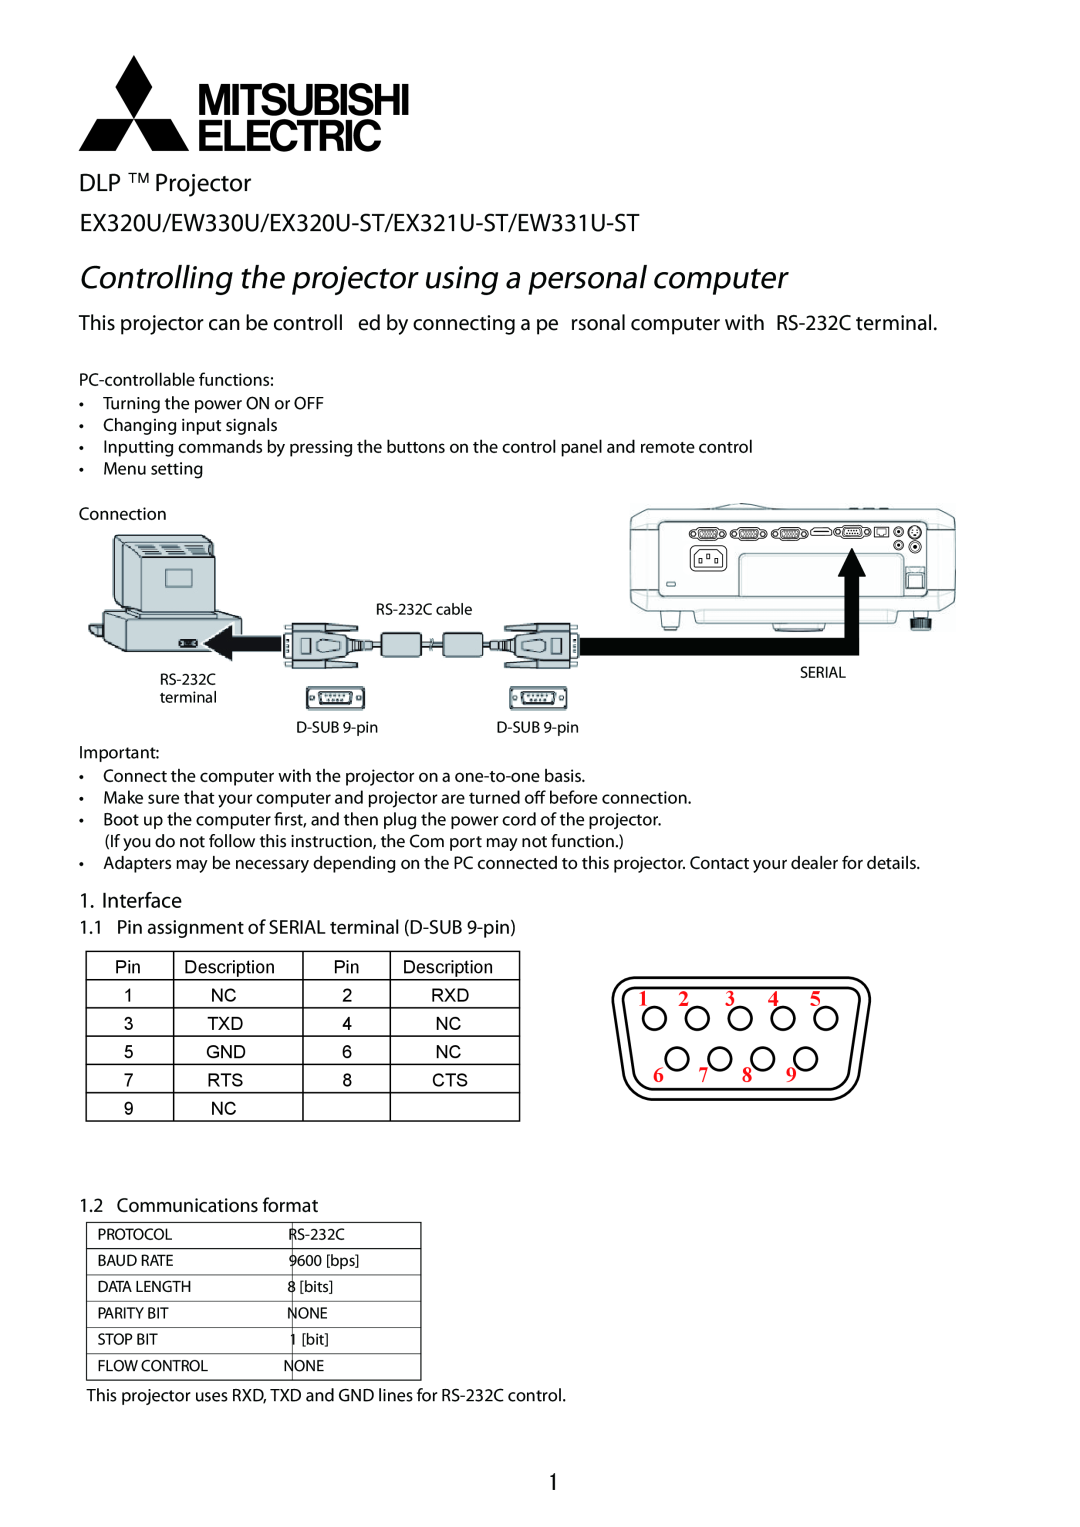 Mitsubishi Electronics EW331U-ST manual Interface, Pin assignment of SERIAL terminal D-SUB 9-pin, Communications format 